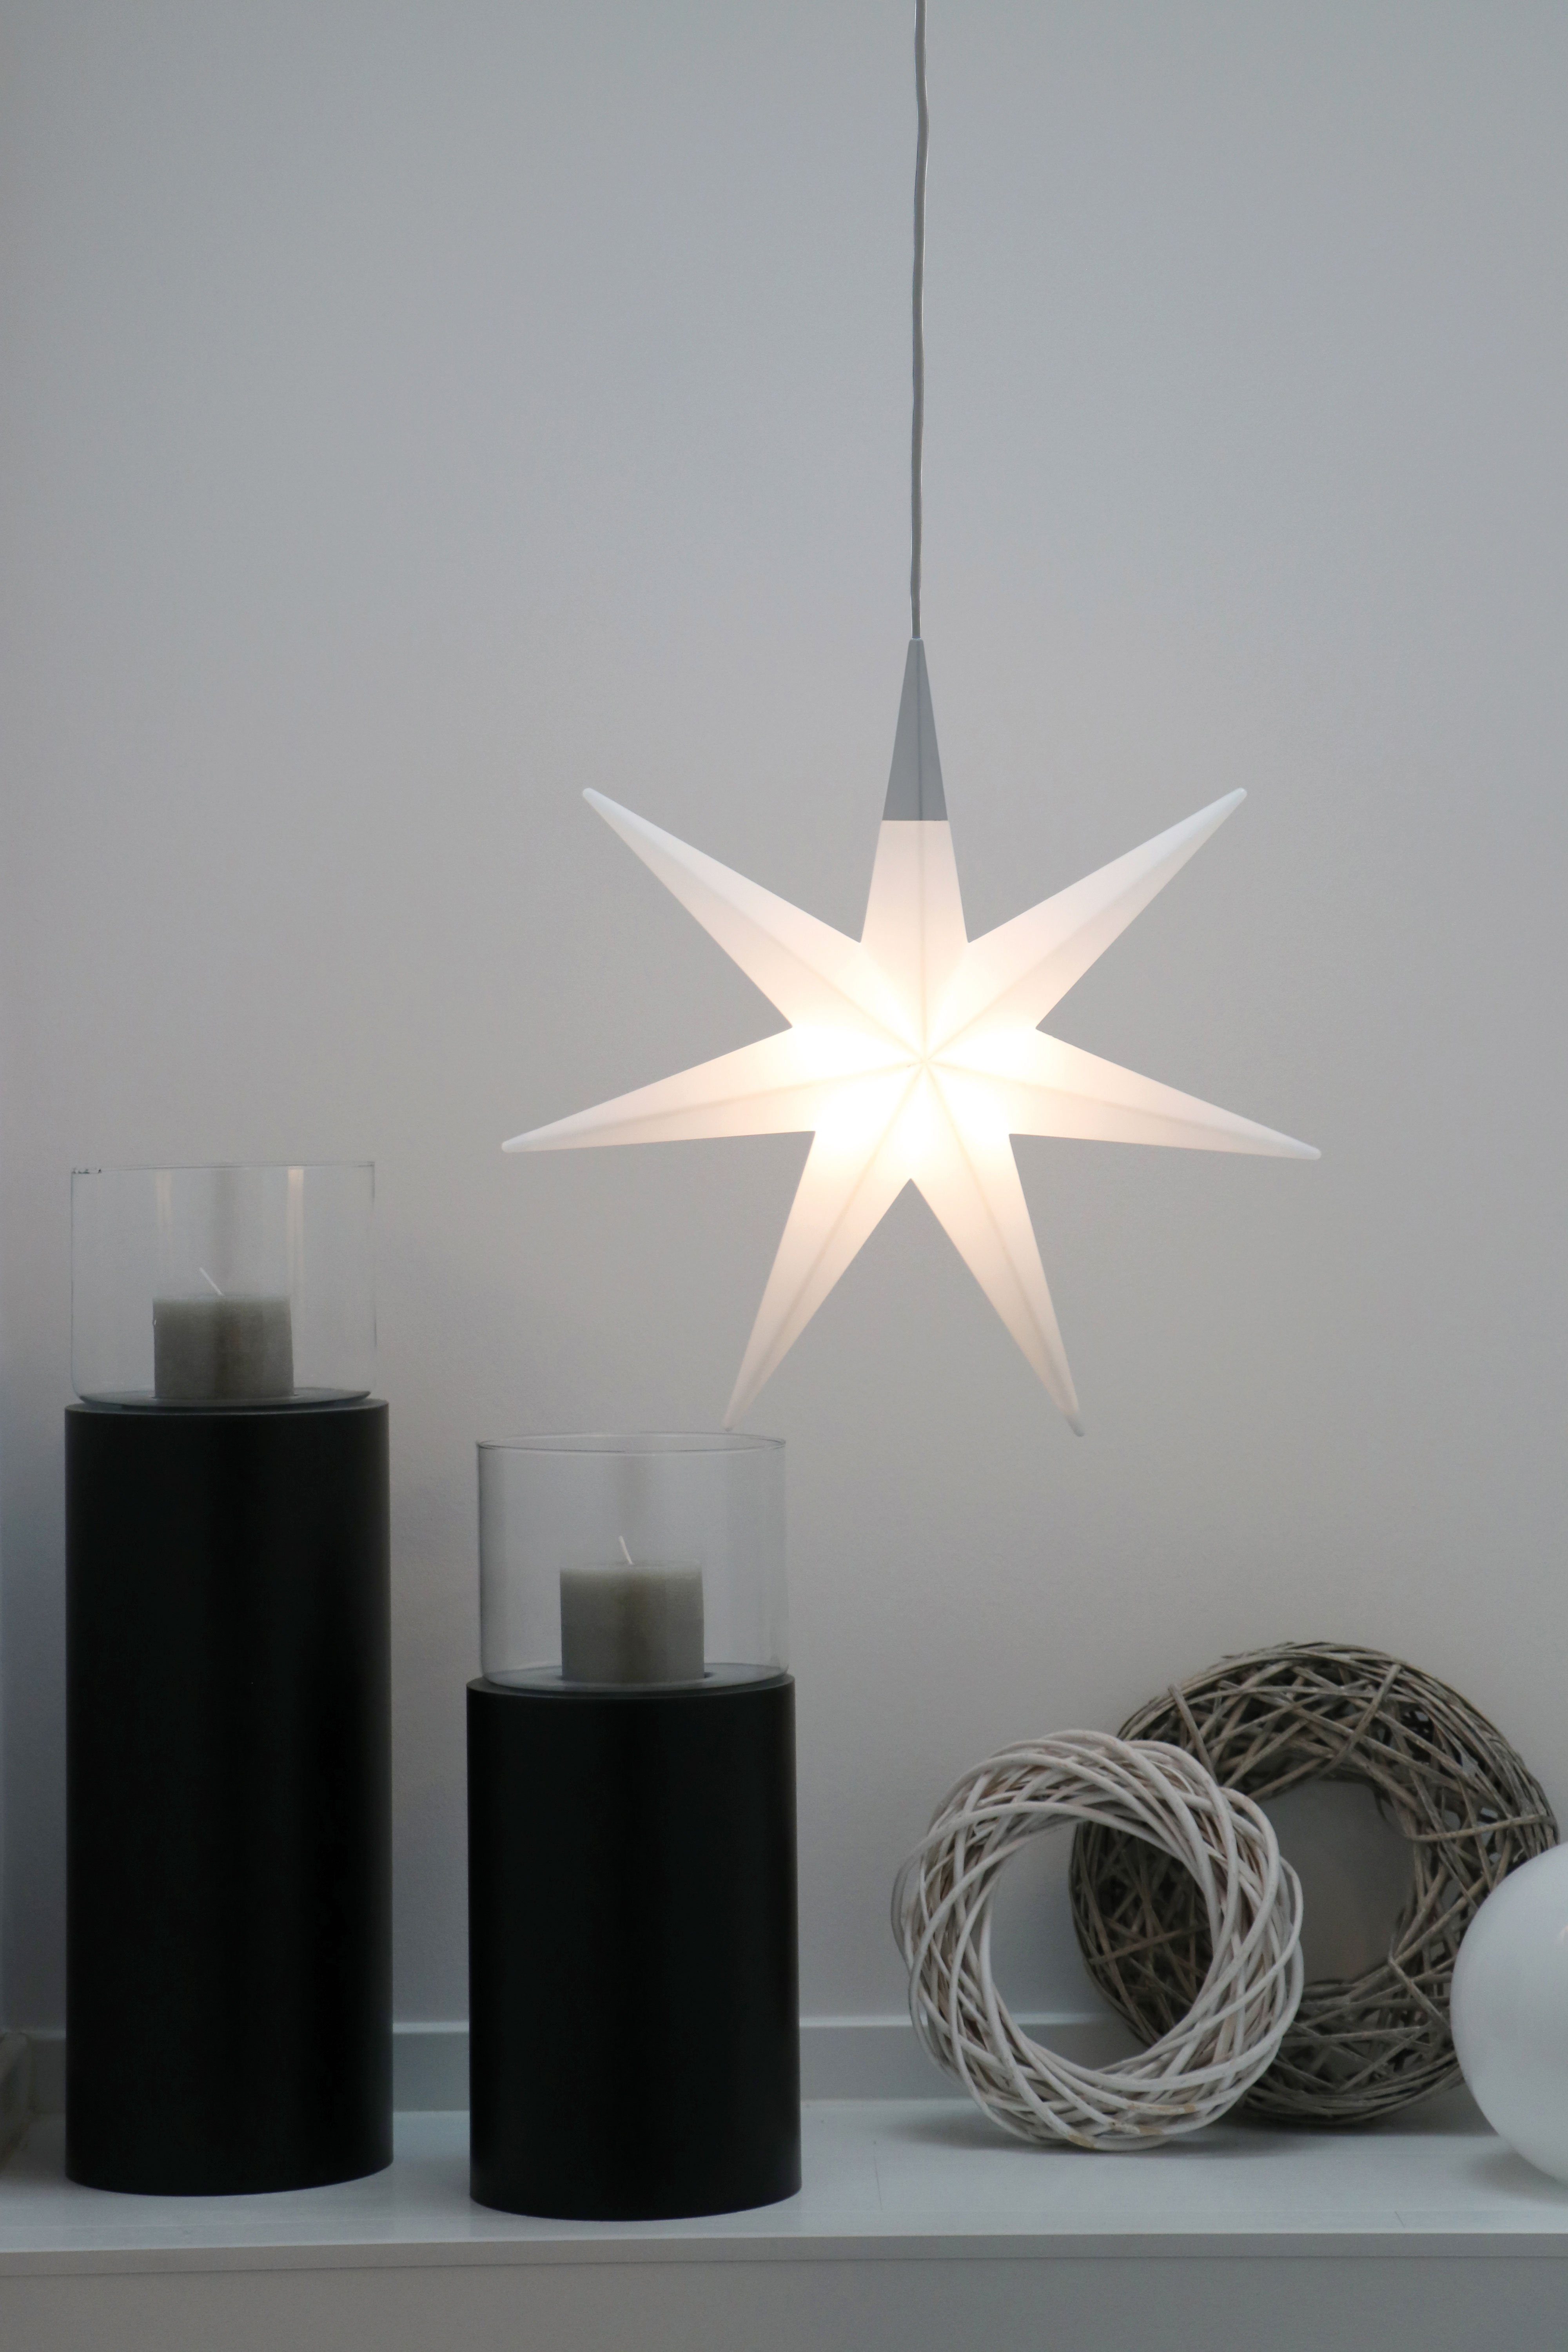 8 seasons Outdoor Warmweiß, weiß integriert, design LED Star, LED In- cm Shining Stern für Glory fest 55 und